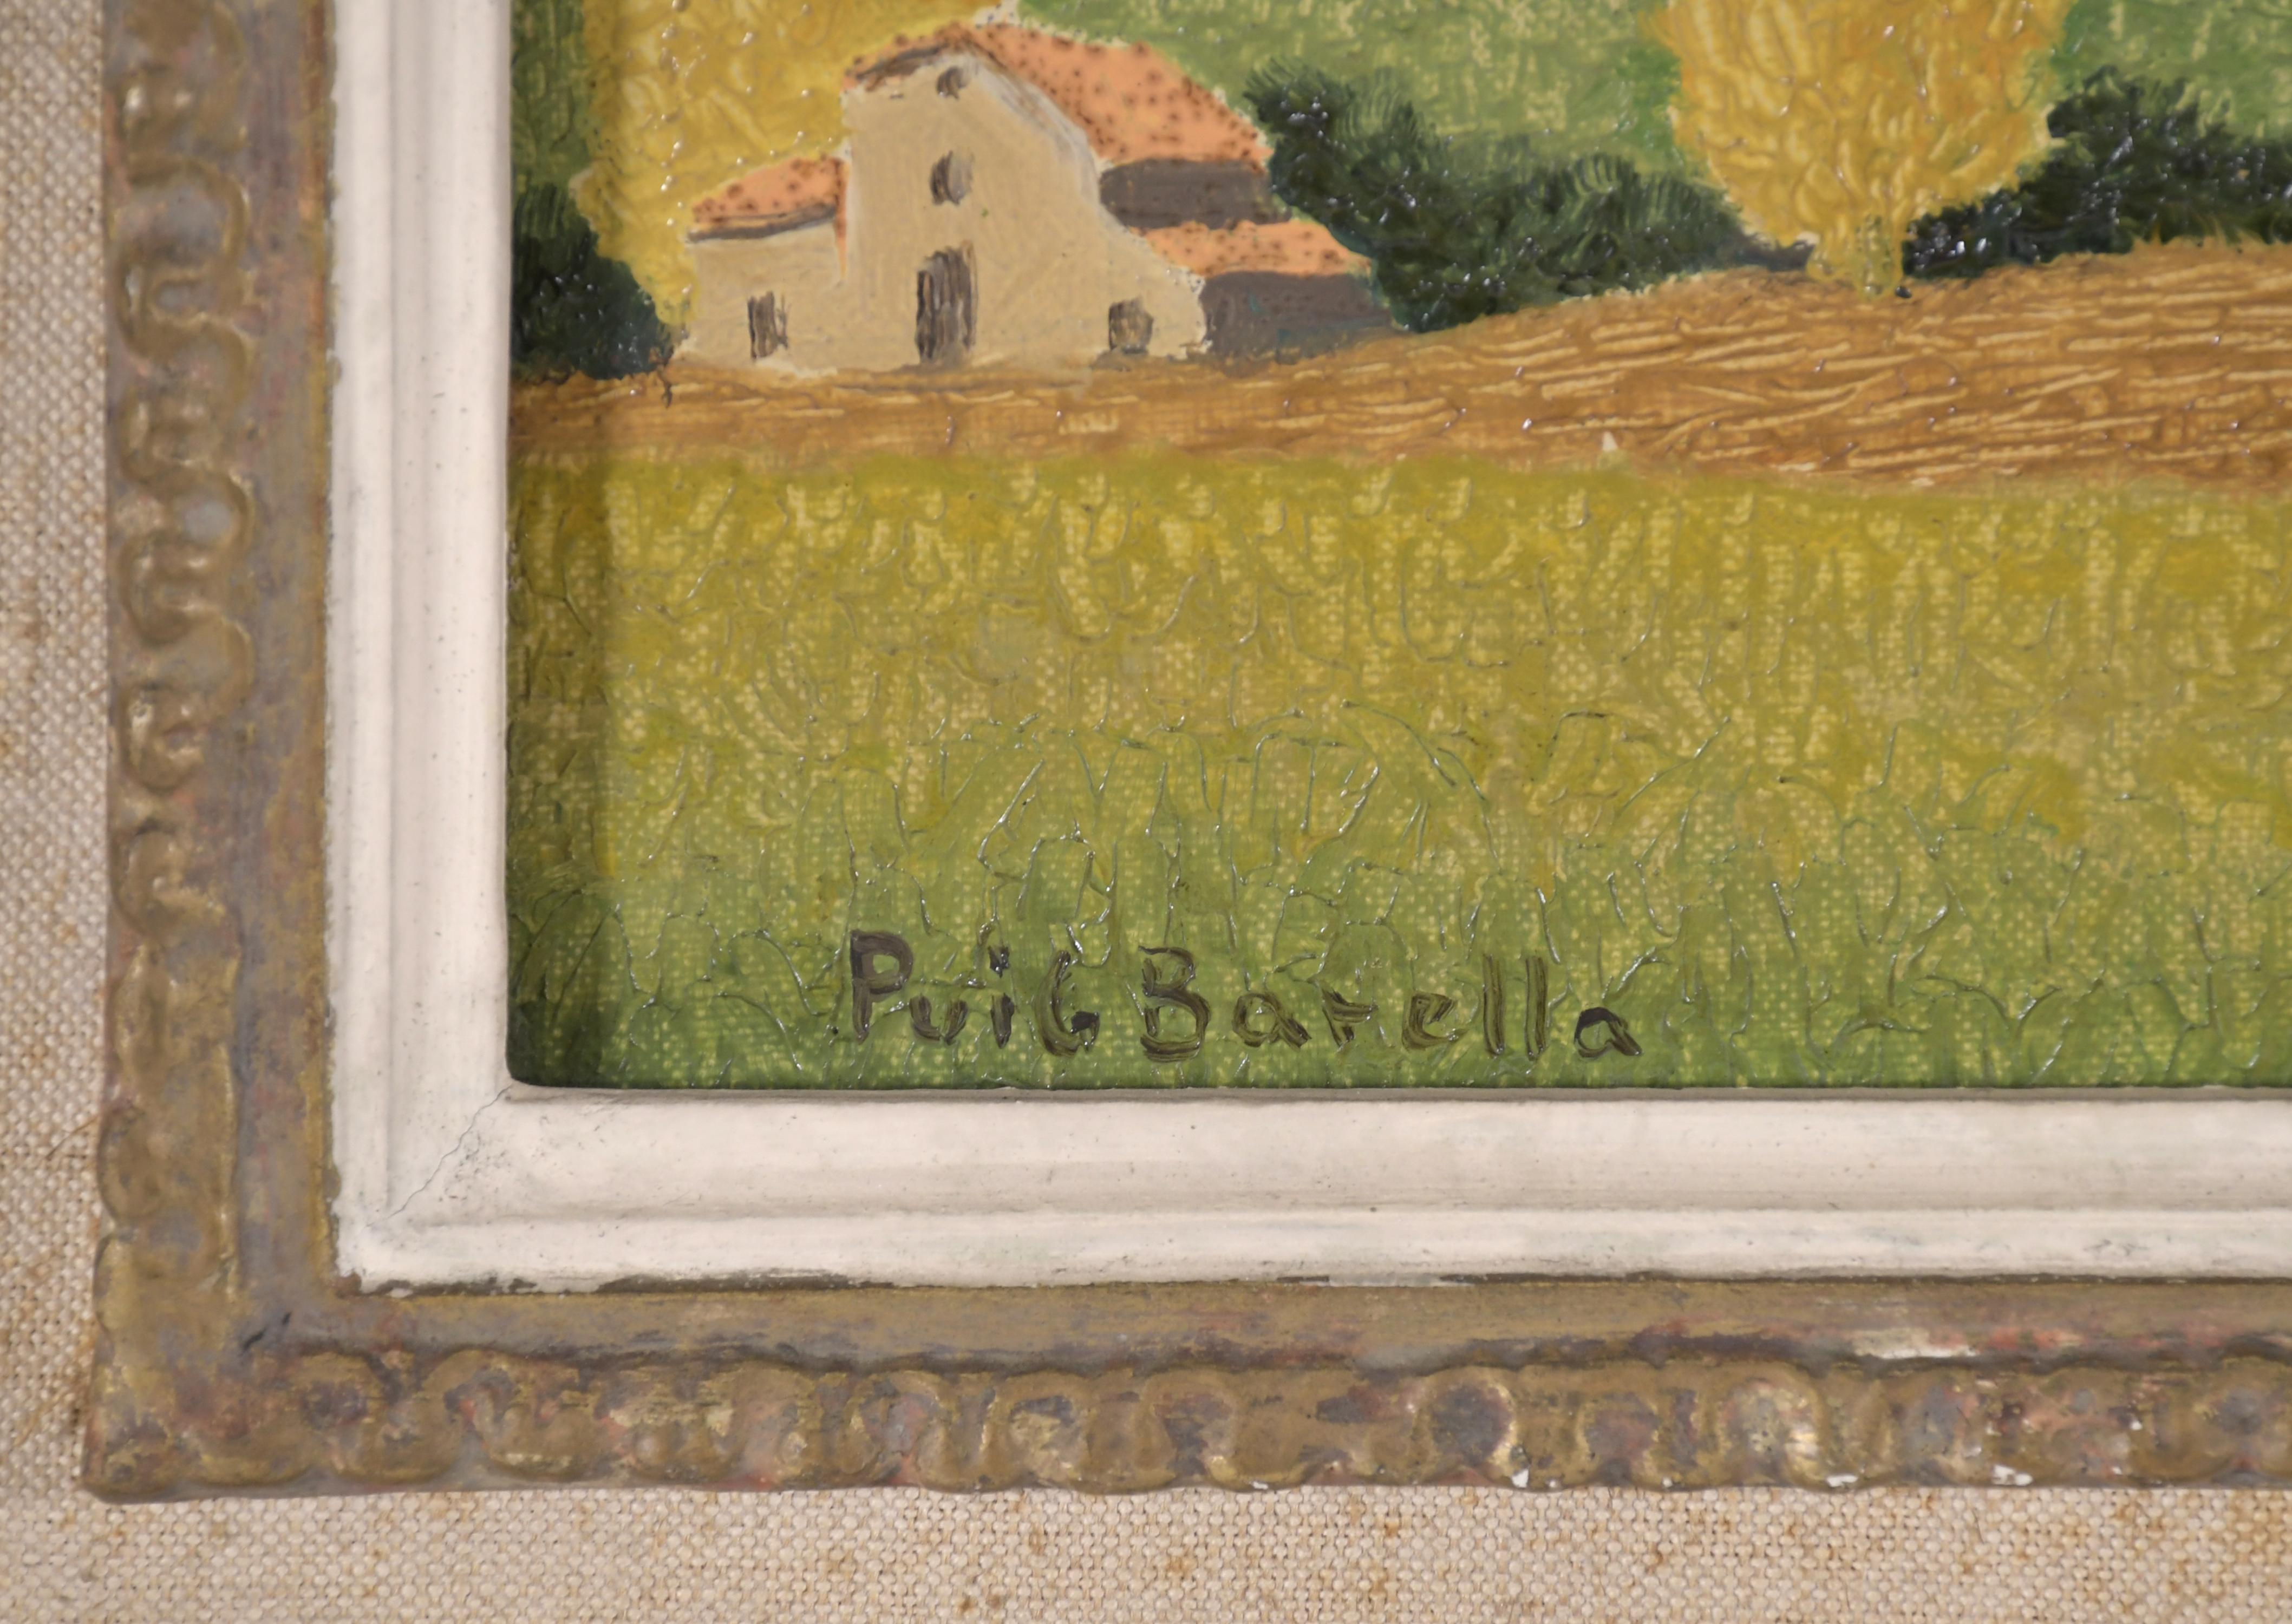 LLUÍS PUIG BARELLA (1894-1984). "PAISAJE", 1956.